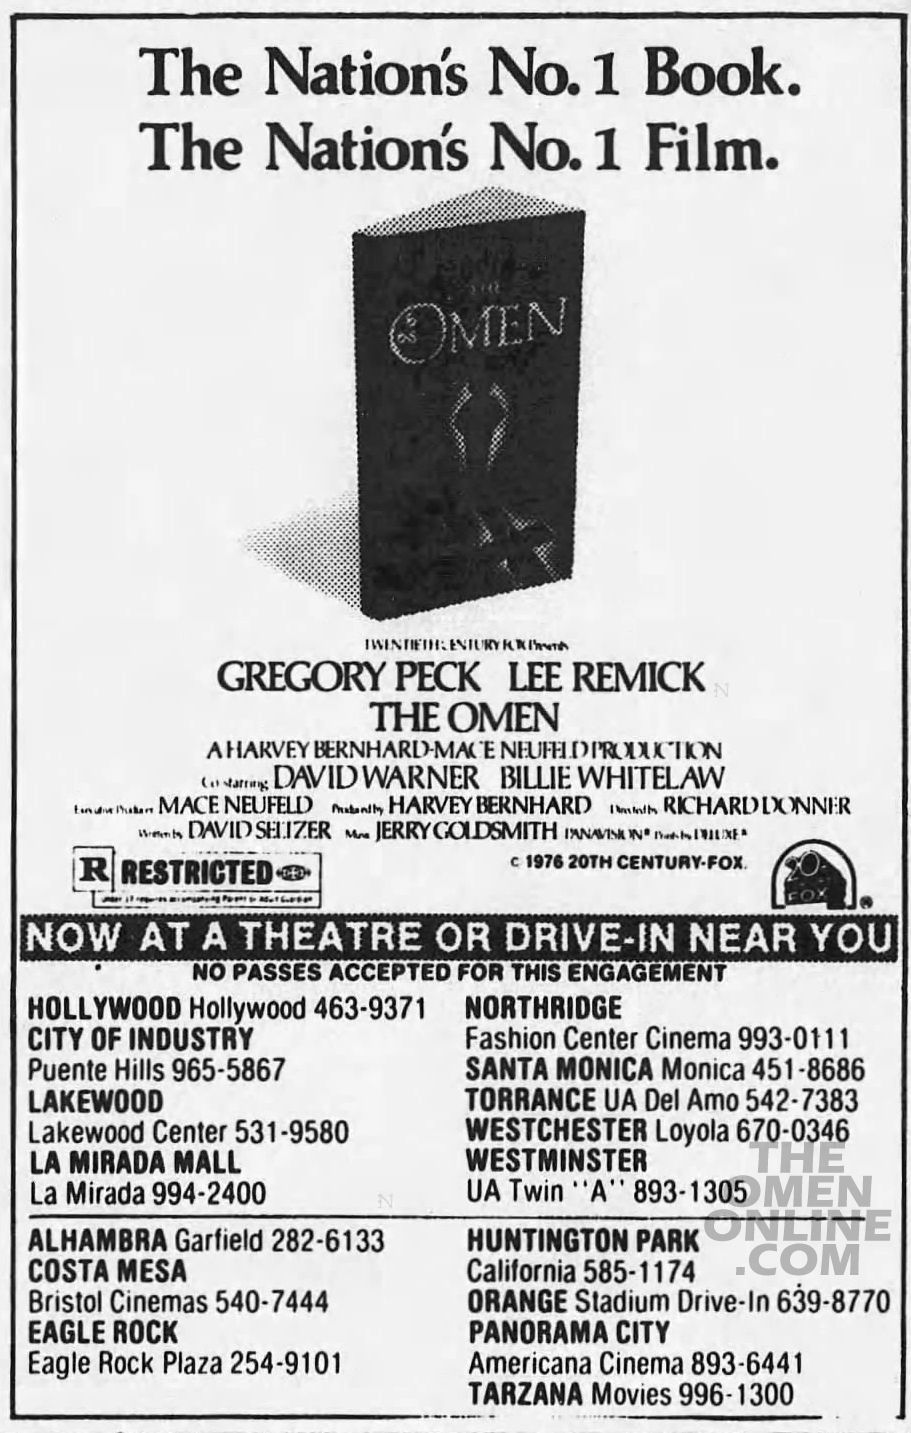 Newspaper ad showing The Omen novelization